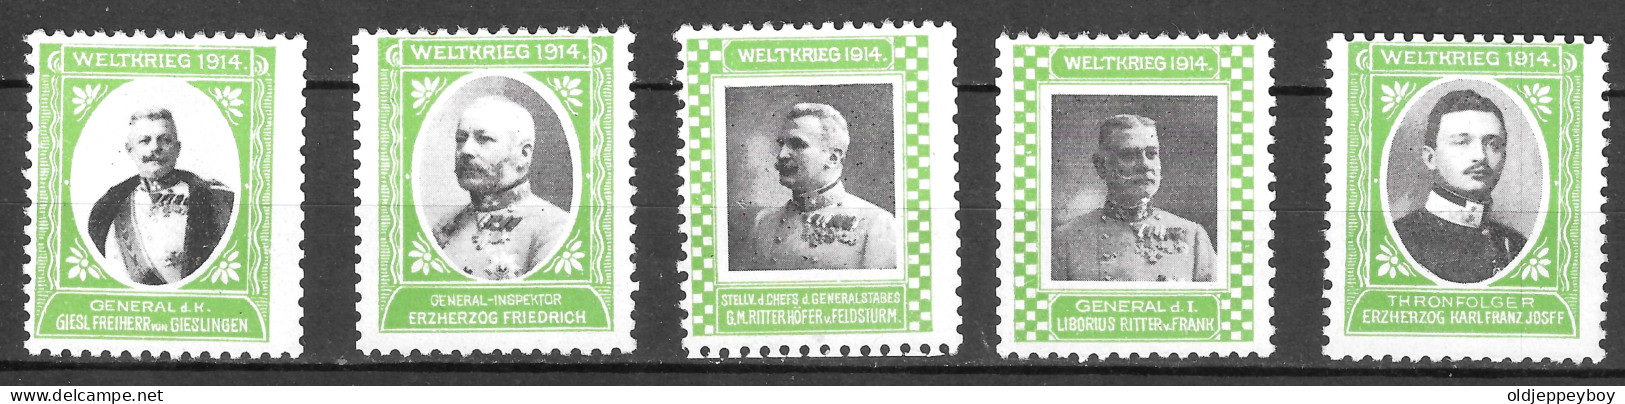 VIGNETTE CINDERELLA Erinnophilie K.U.K GERMANY AUSTRIA HUNGARY Österreich  Weltkrieg 1914 GENERALS LEADERS FULL SET 25 - Militaria